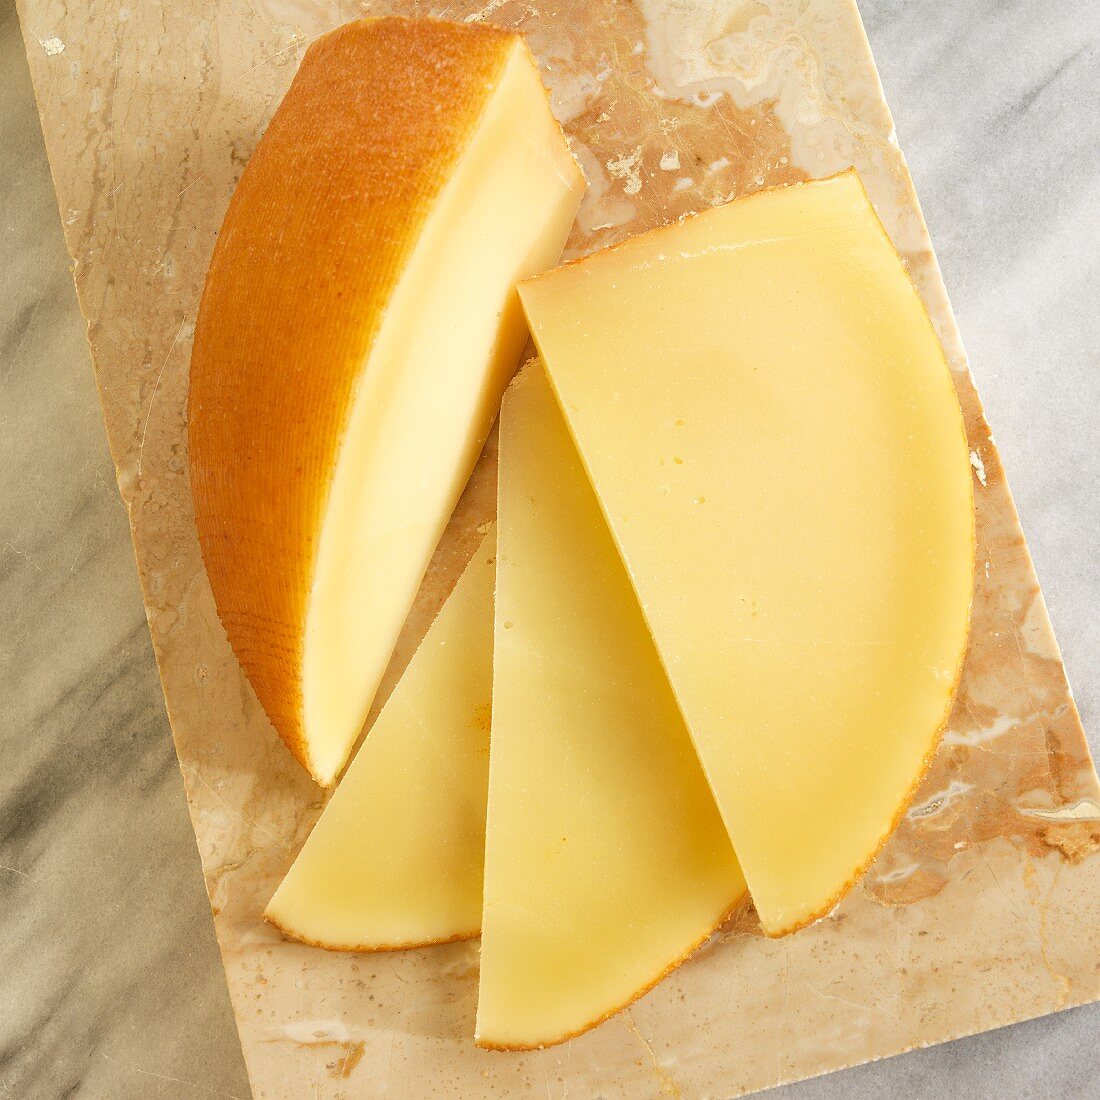 San Simon cheese (smoked Spanish cheese) on a marble chopping board